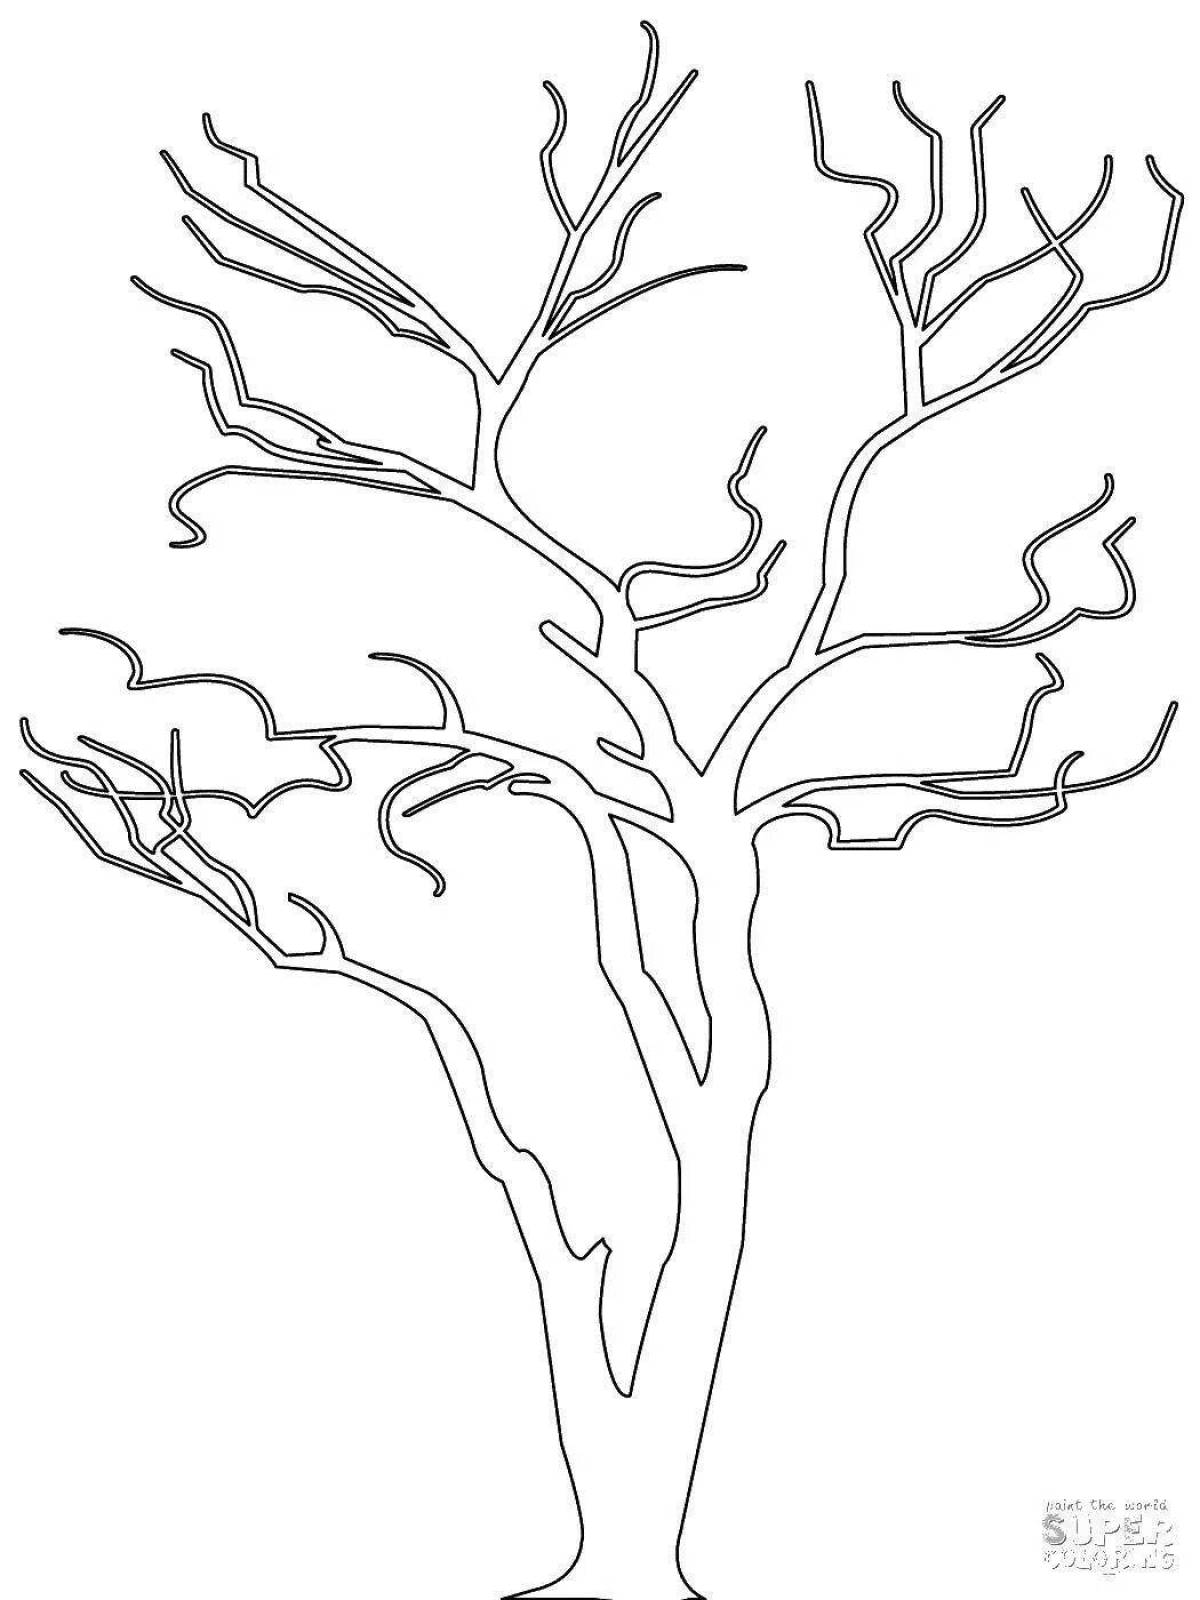 Рисунок буйного раскидистого дерева